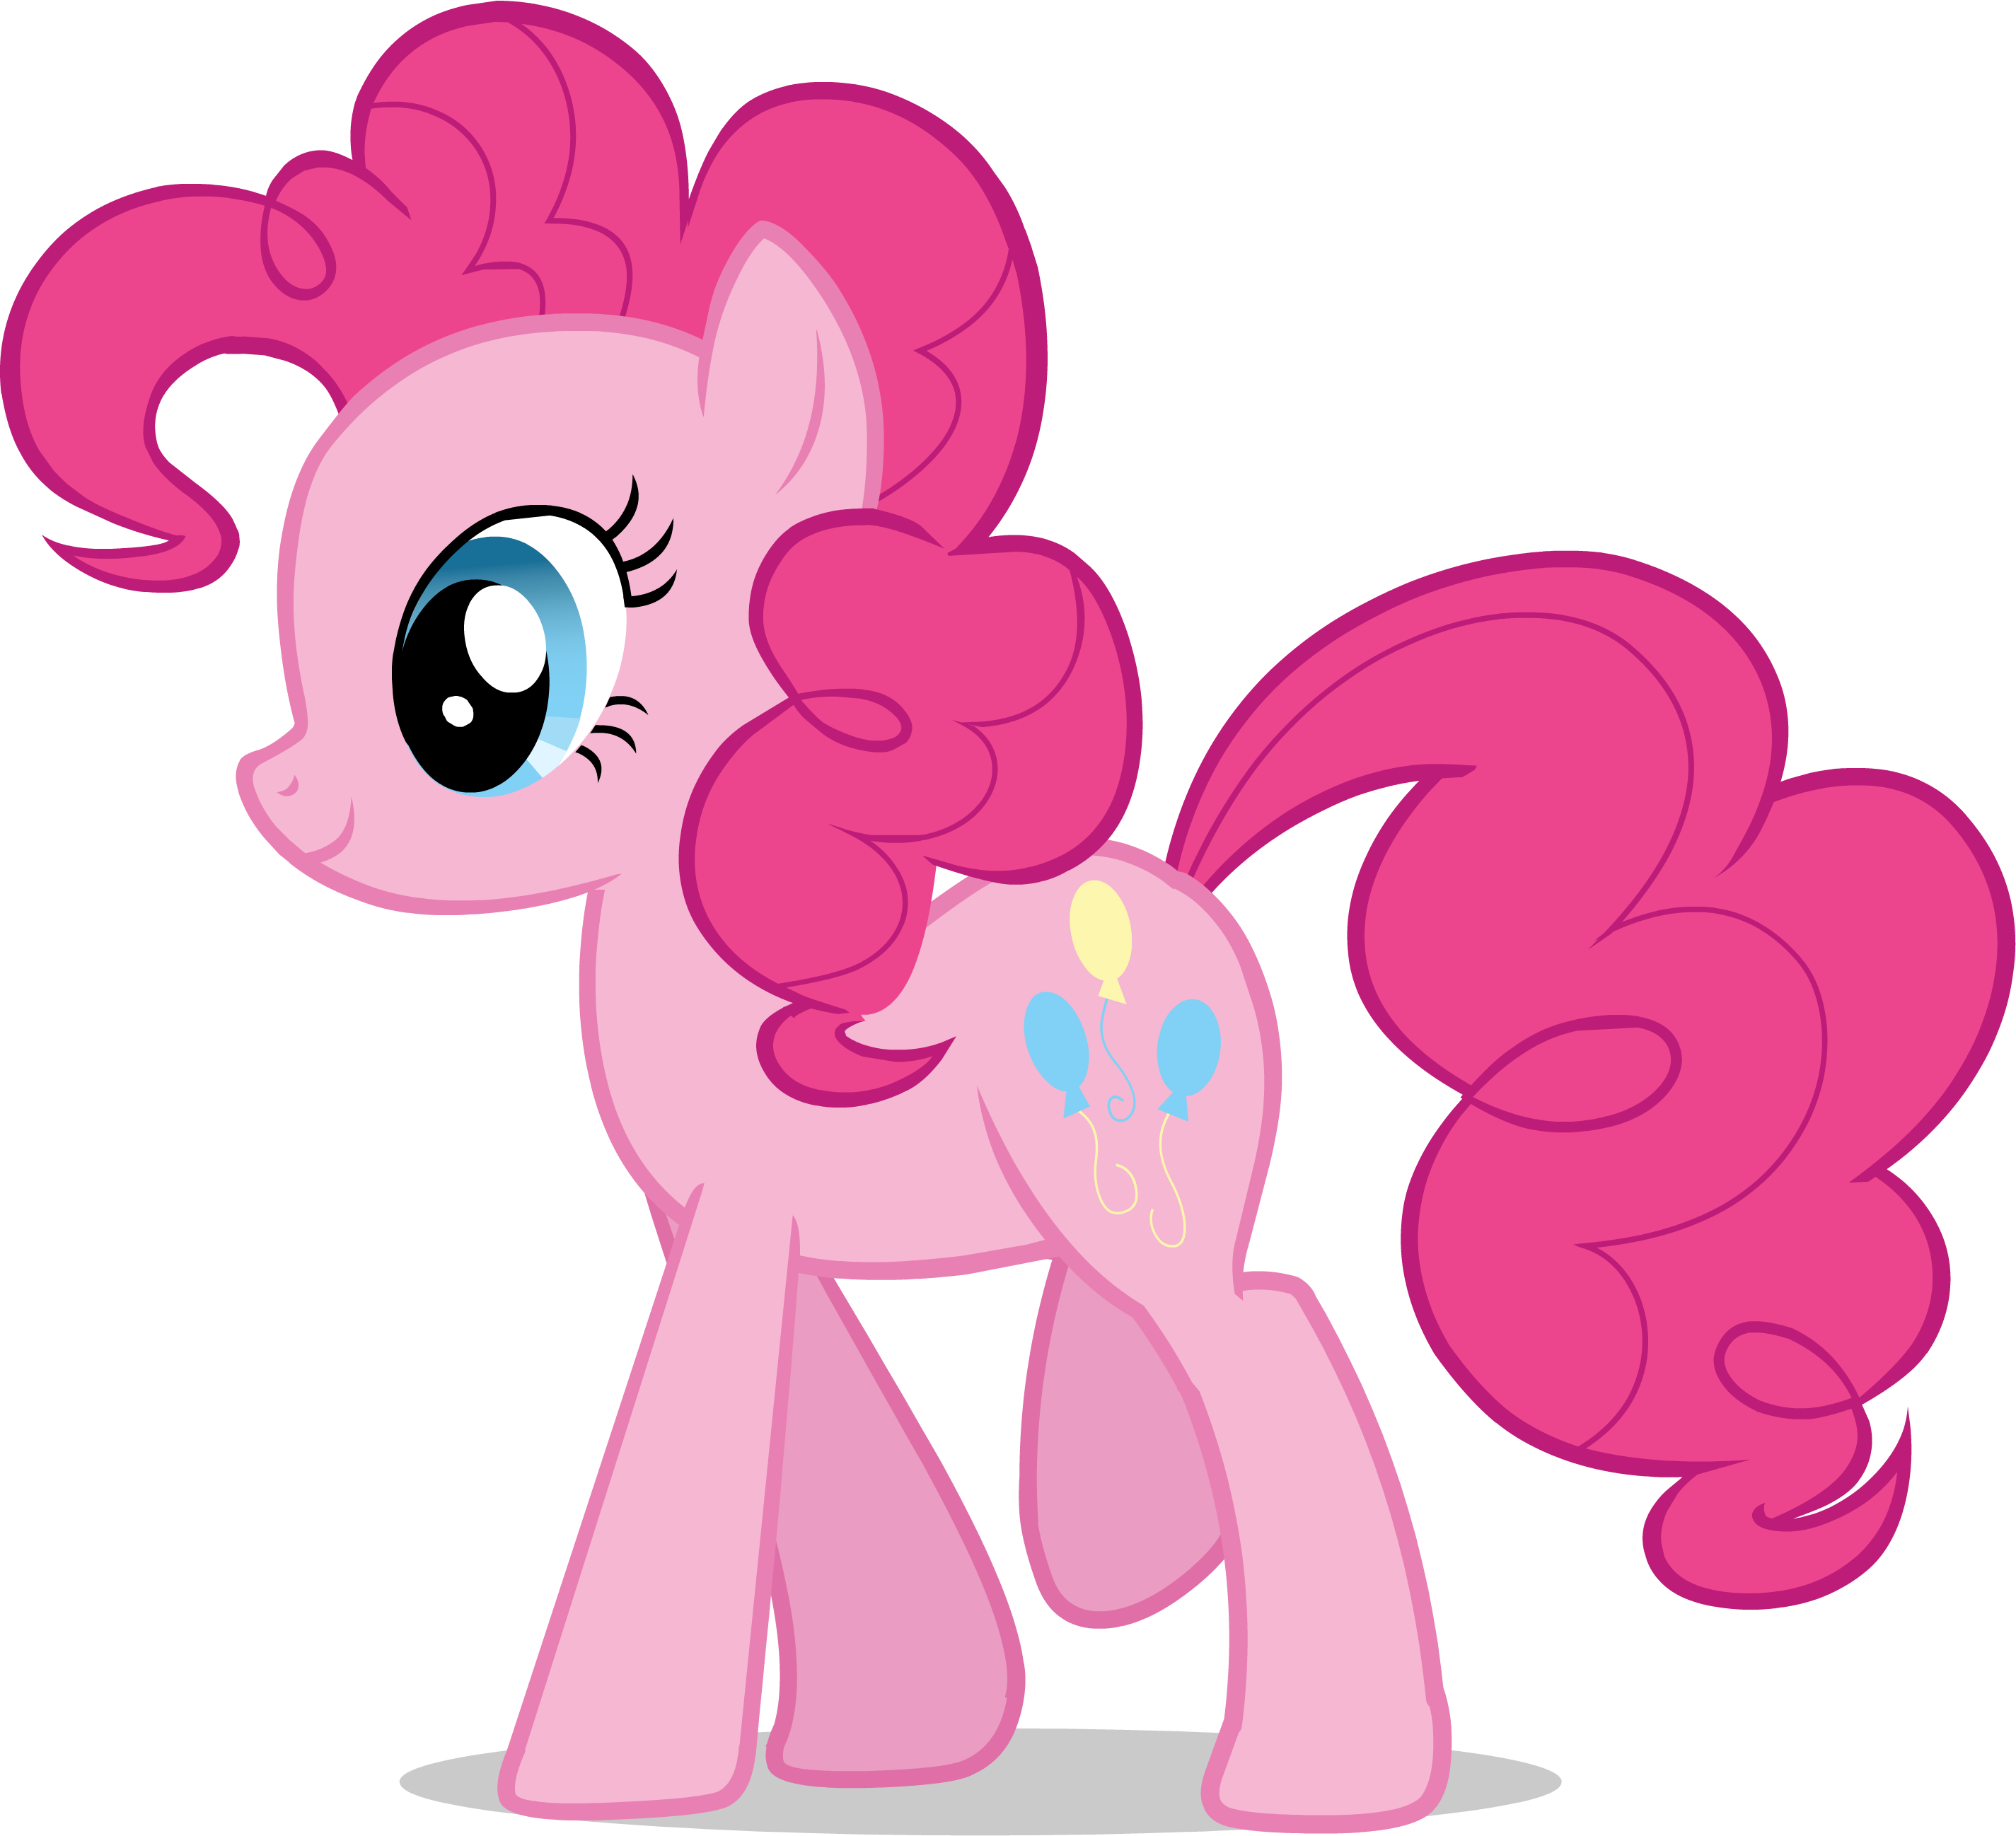 Pinkie Pie images - My Little Pony Friendship is Magic Wiki